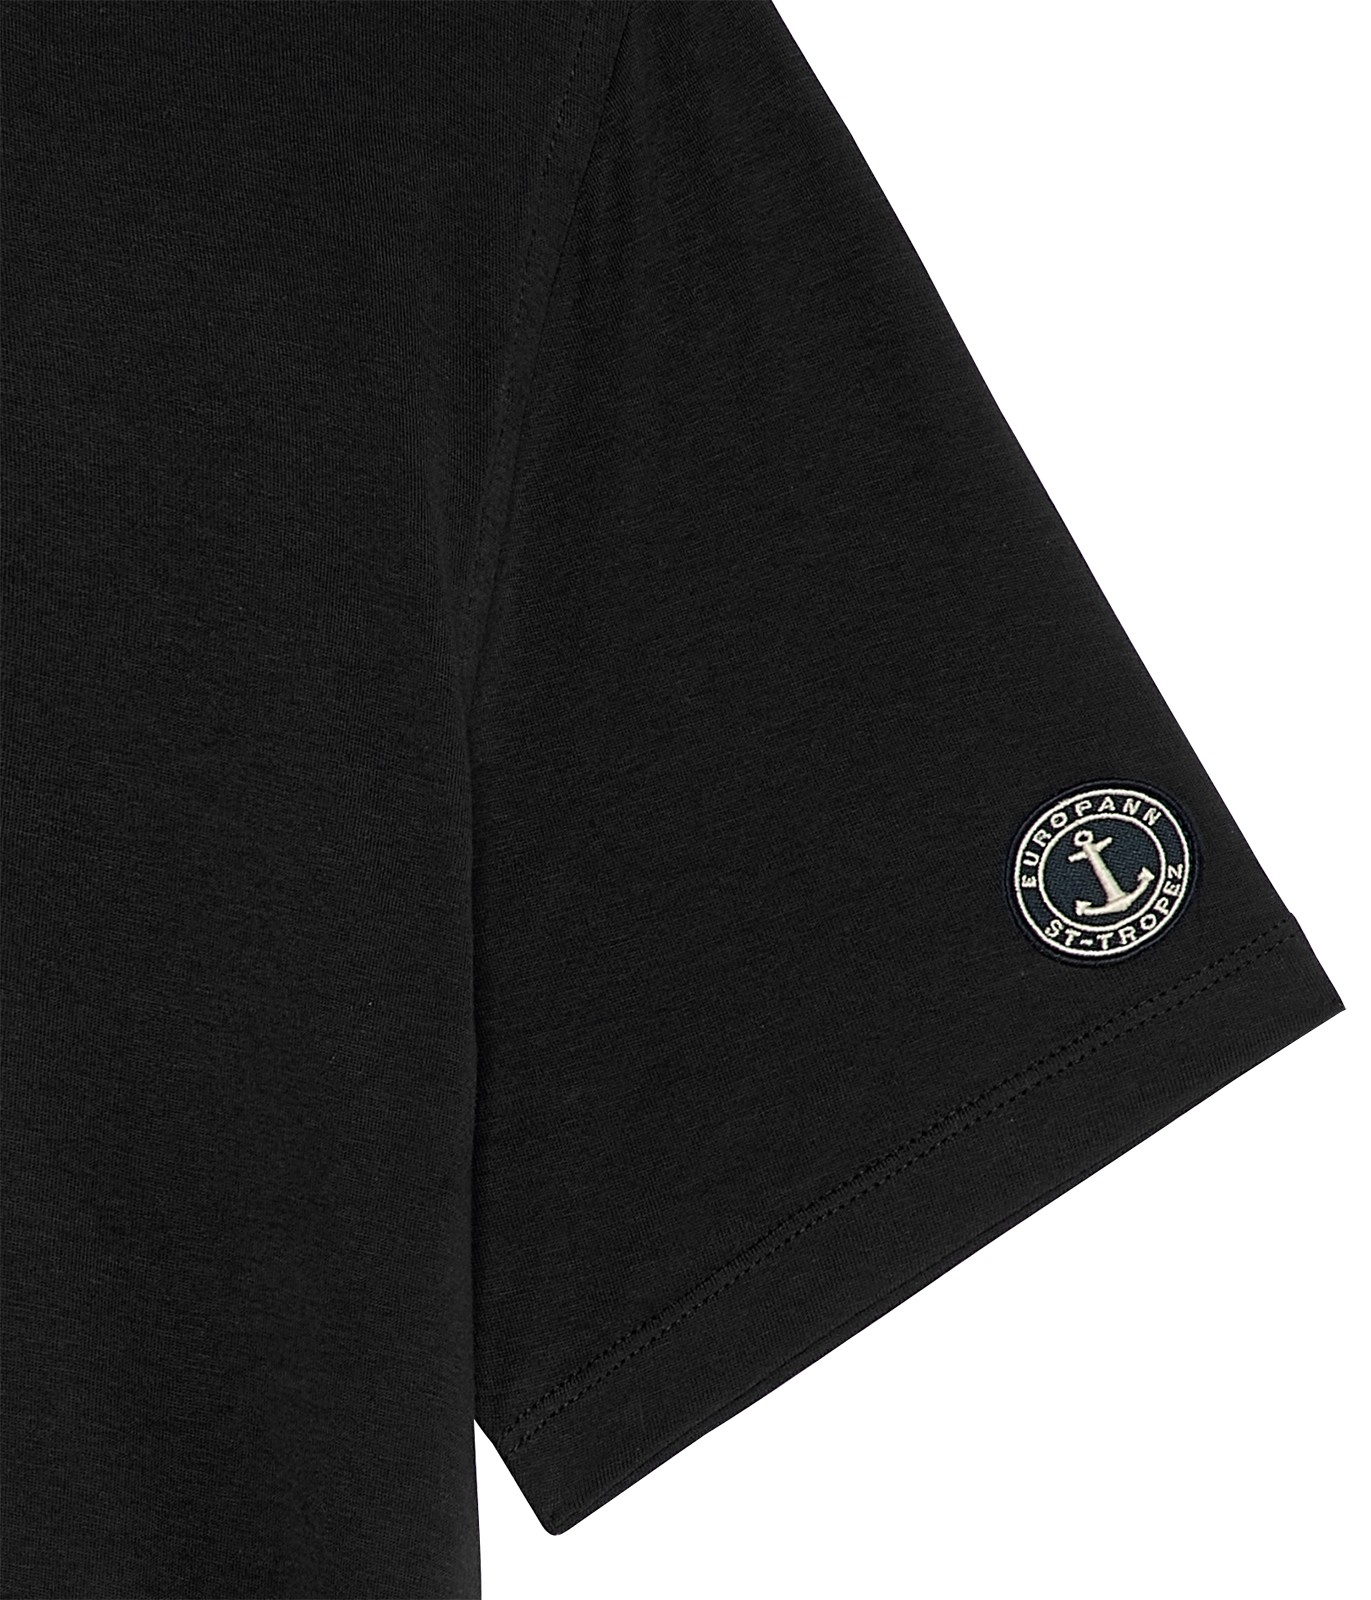 Polo shirt Louis Vuitton Black size M International in Cotton